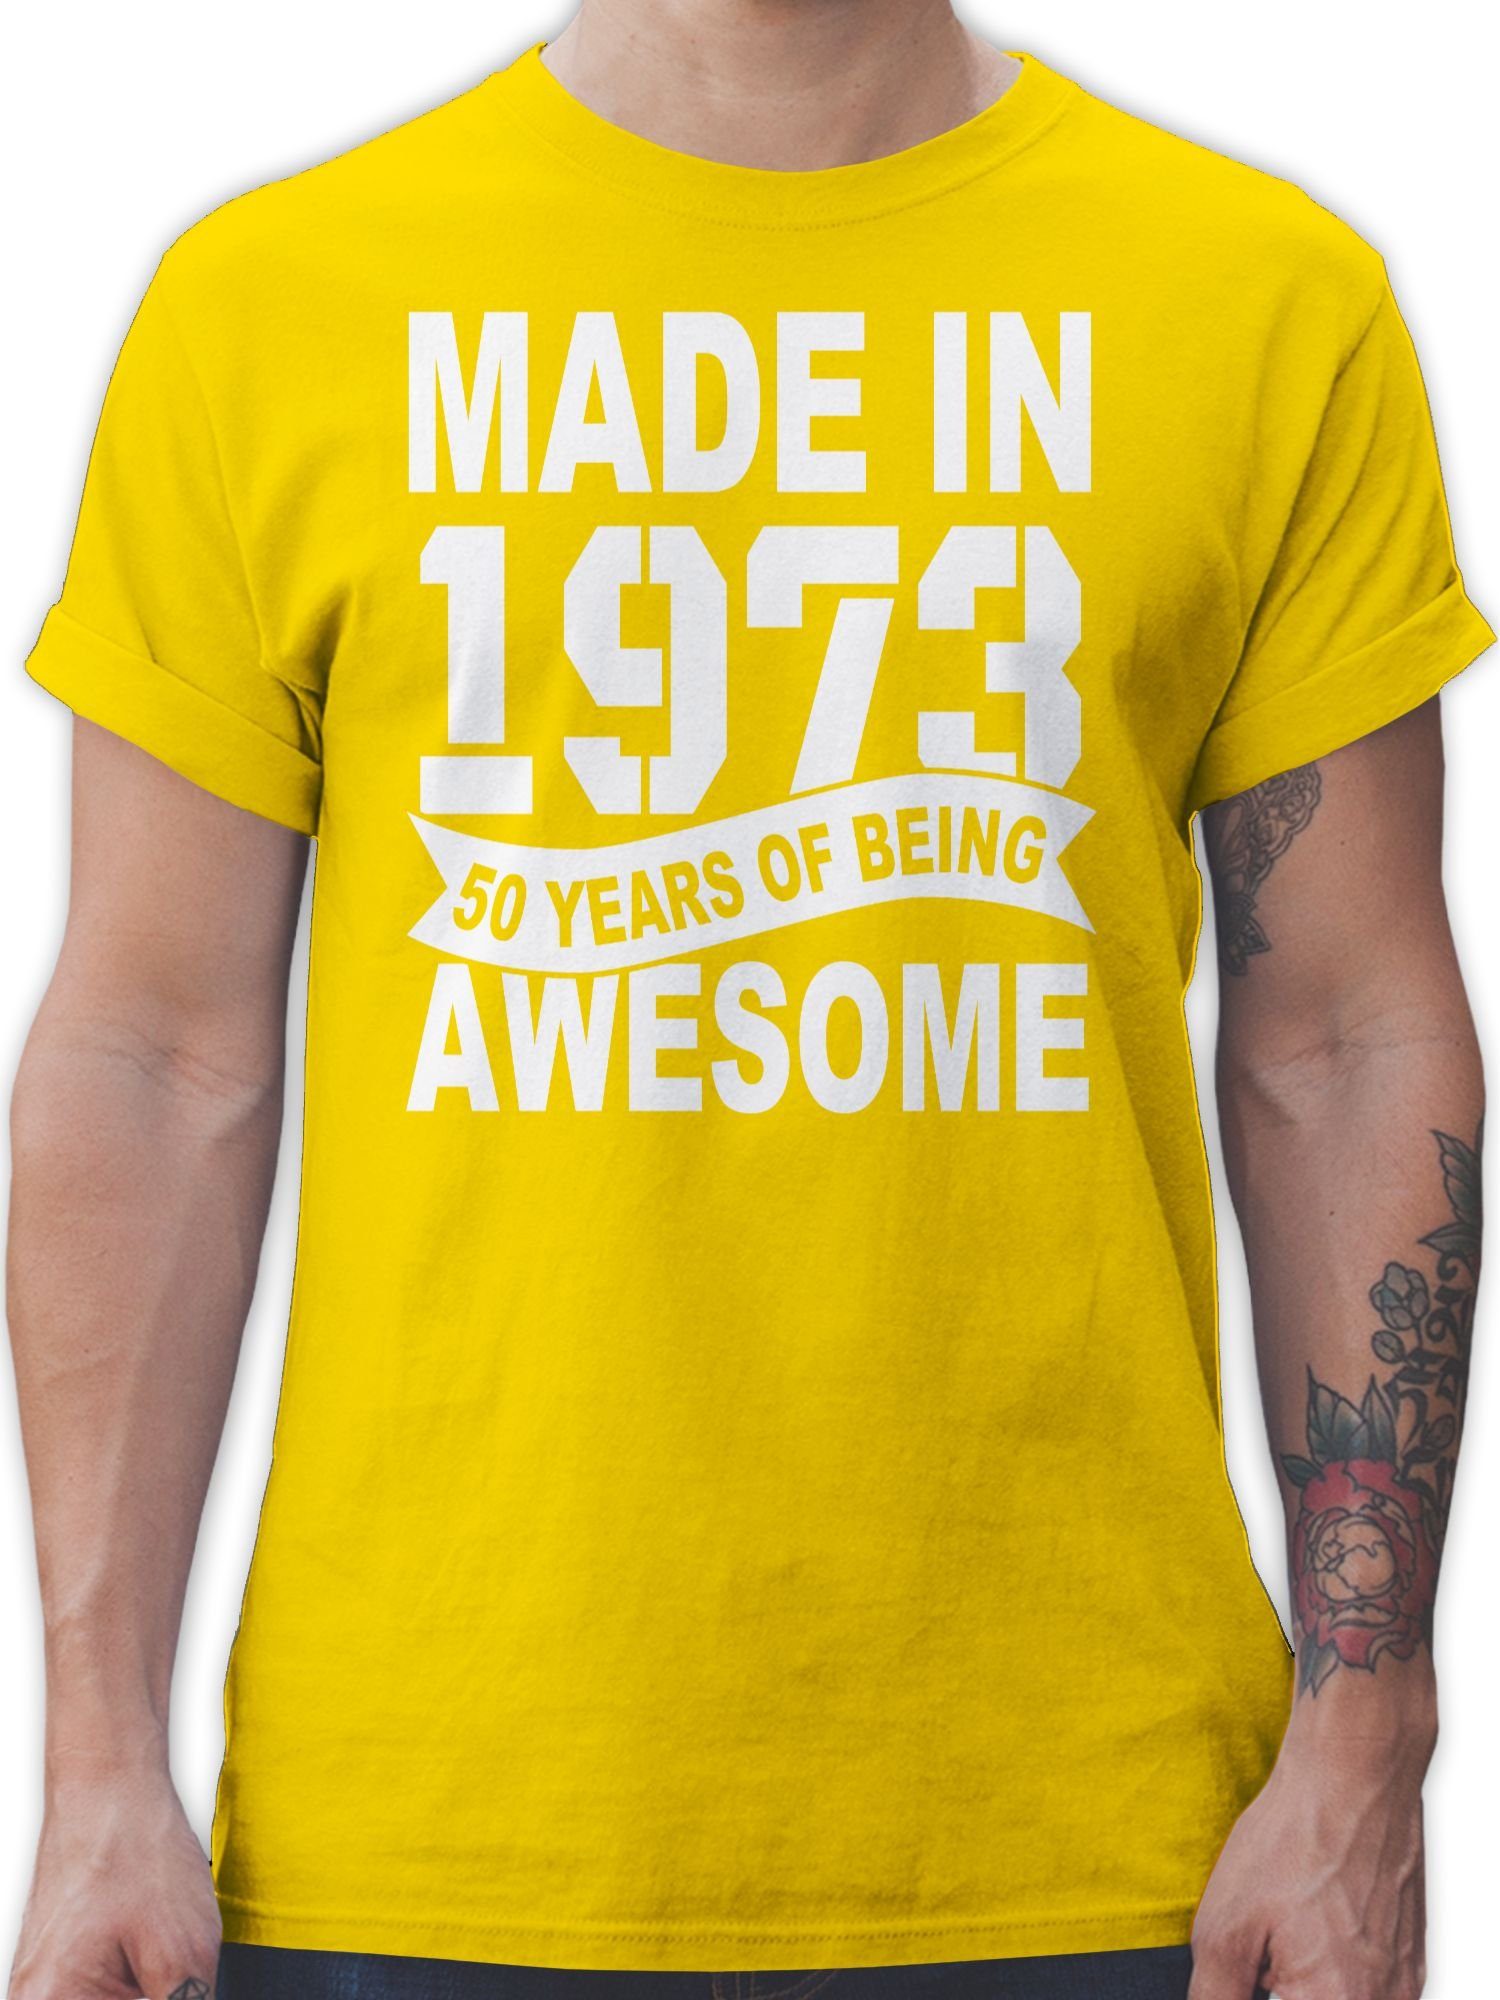 Echtheitsgarantie! Shirtracer T-Shirt Made in Gelb weiß years 1973 2 of being Geburtstag awesome Fifty 50